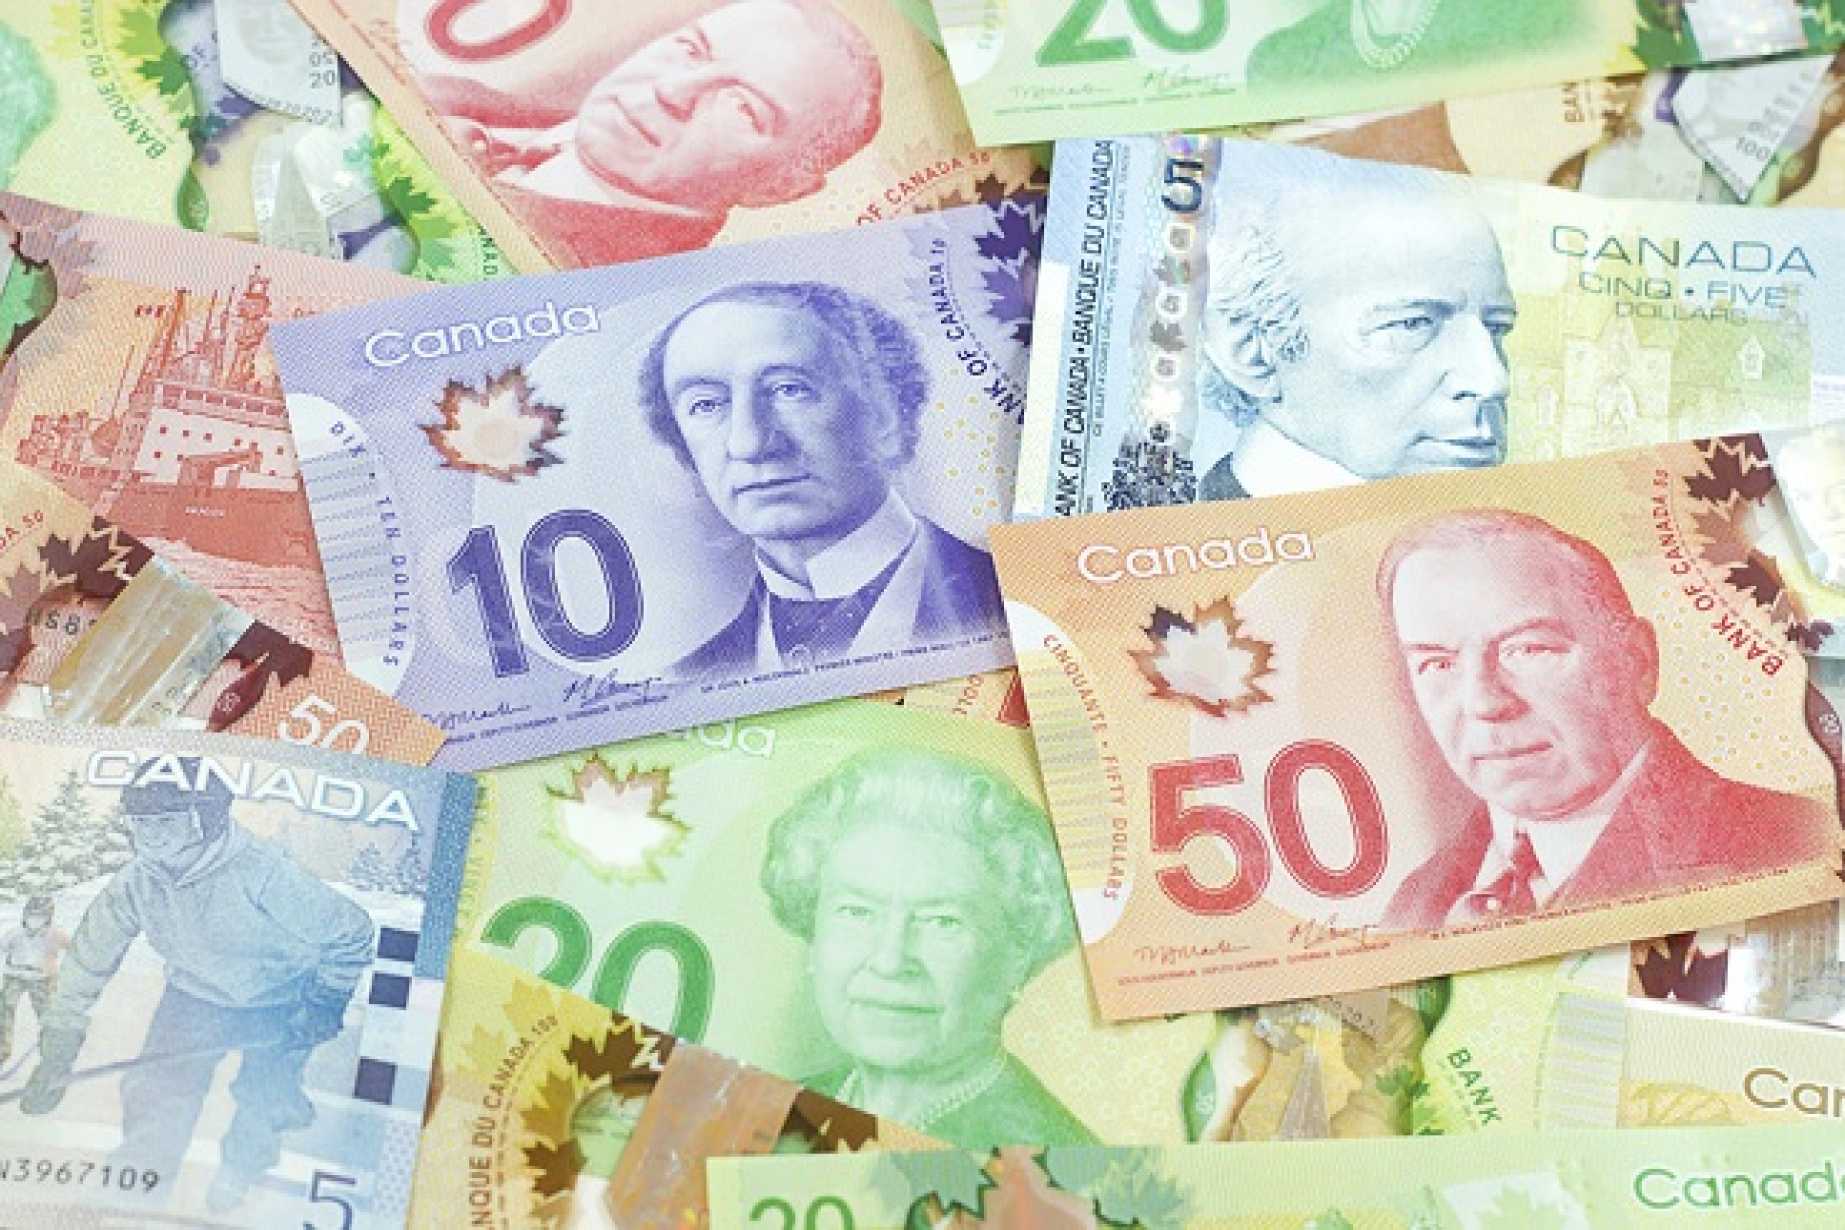 convert canadian dollars to us dollars